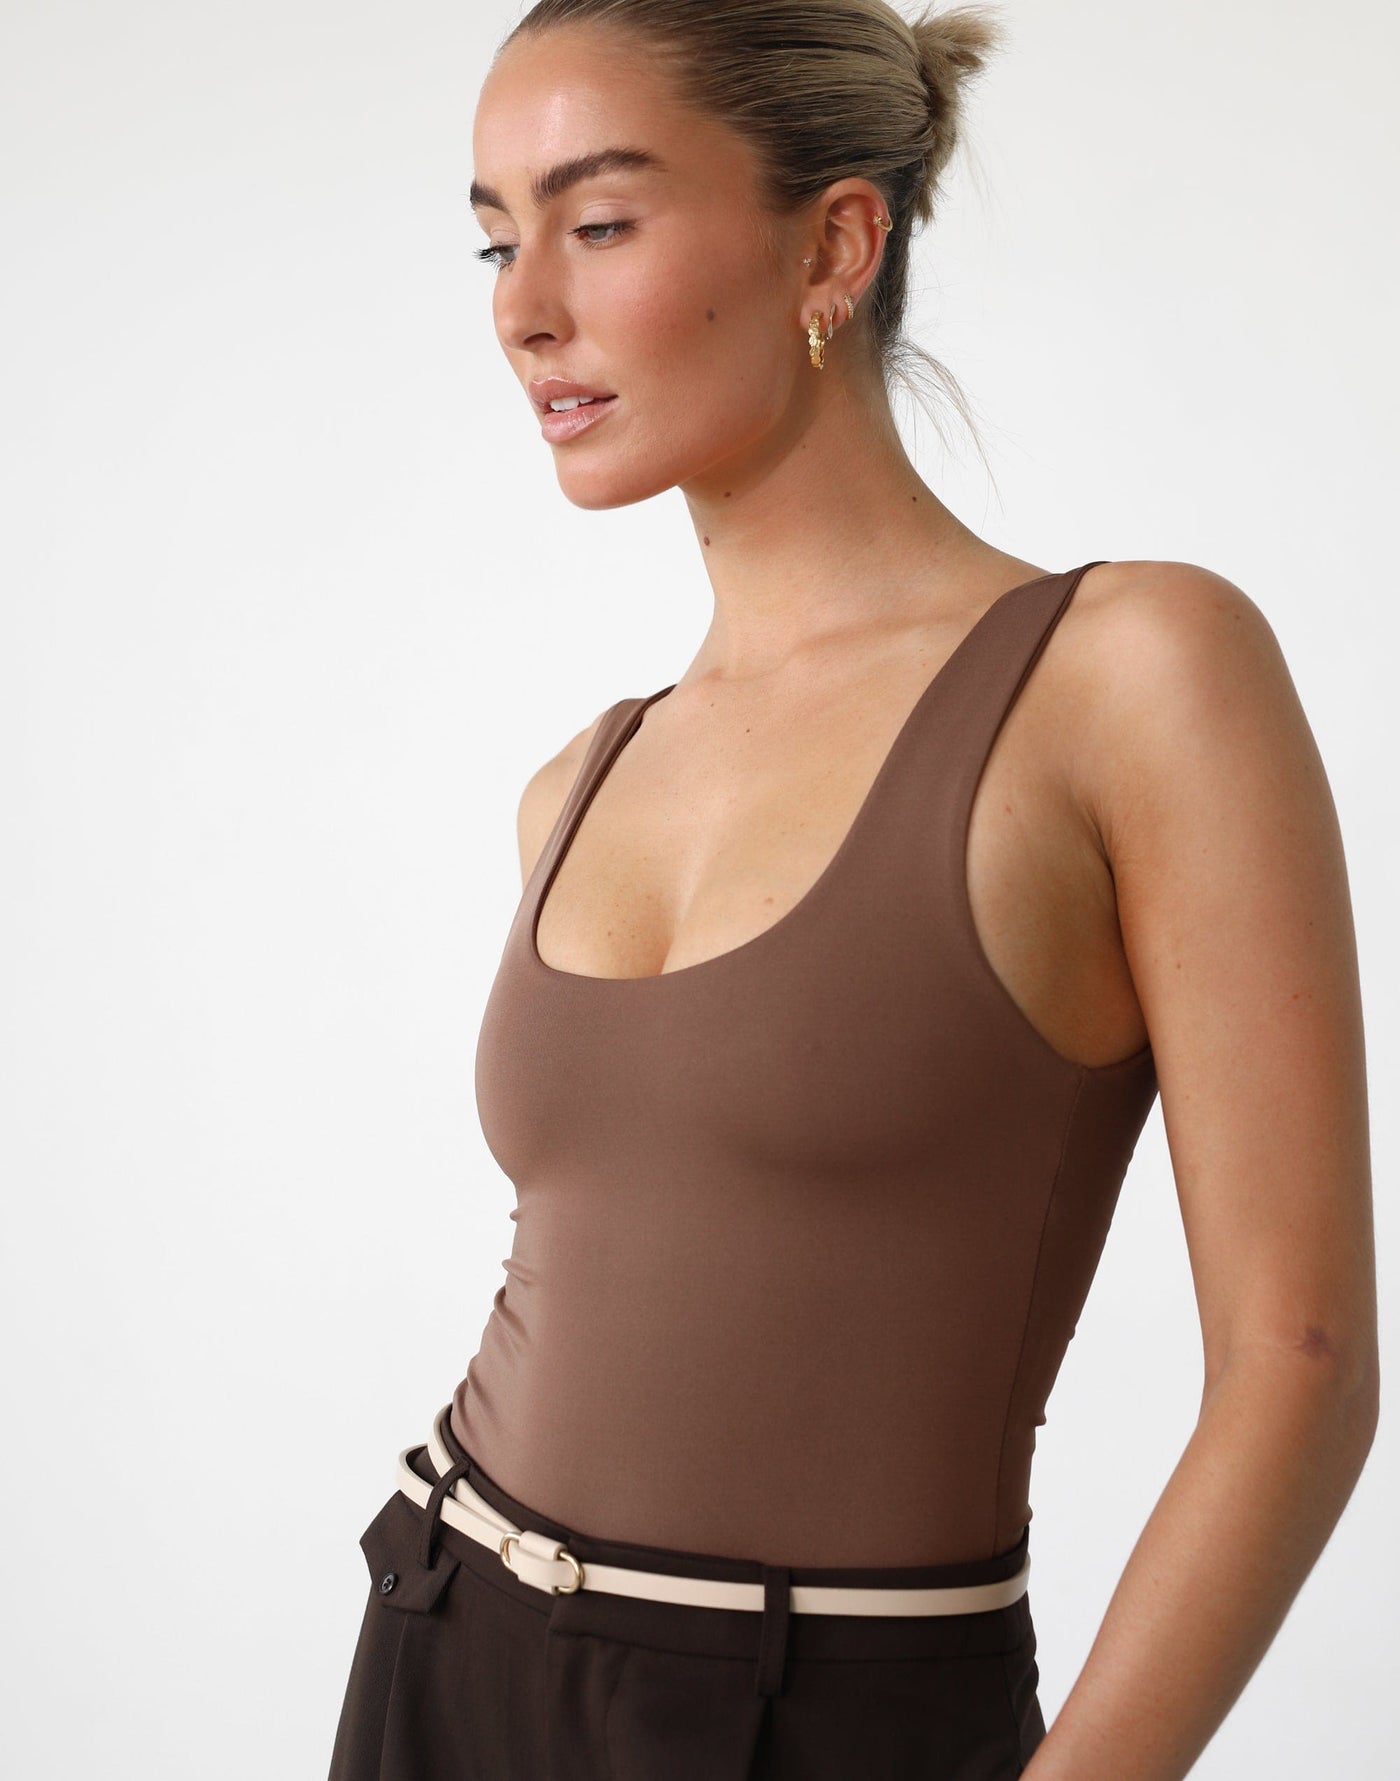 Levitate Bodysuit (Mocha) - Low Back Scoop Neck Bodysuit - Women's Top - Charcoal Clothing